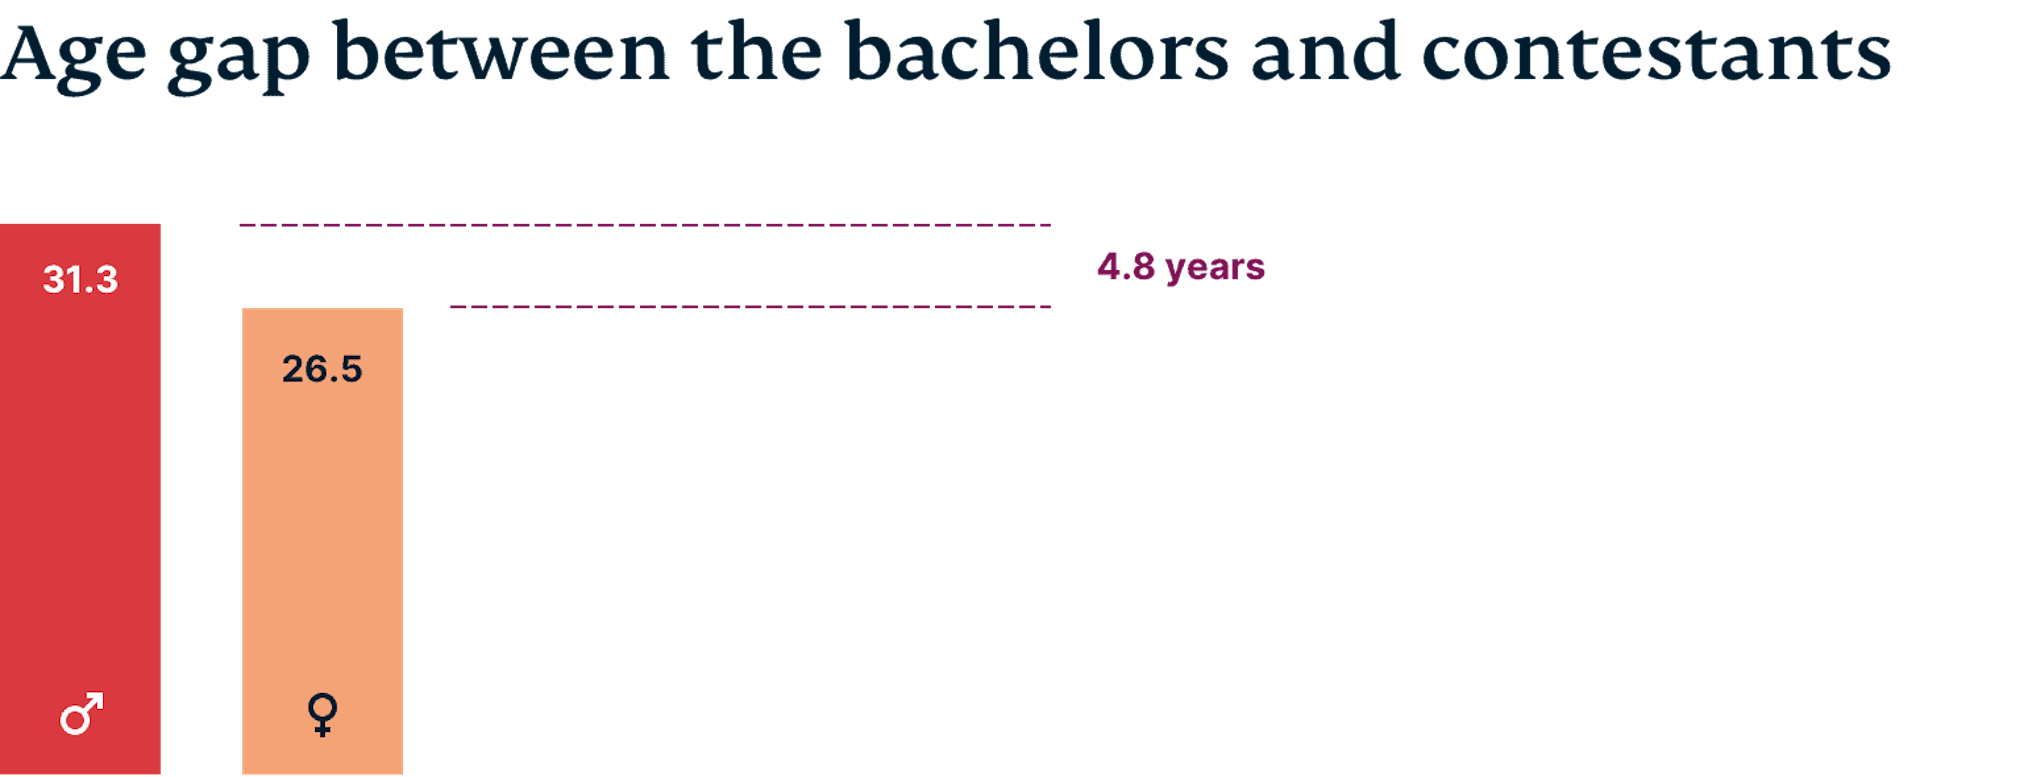 Bachelor age gap